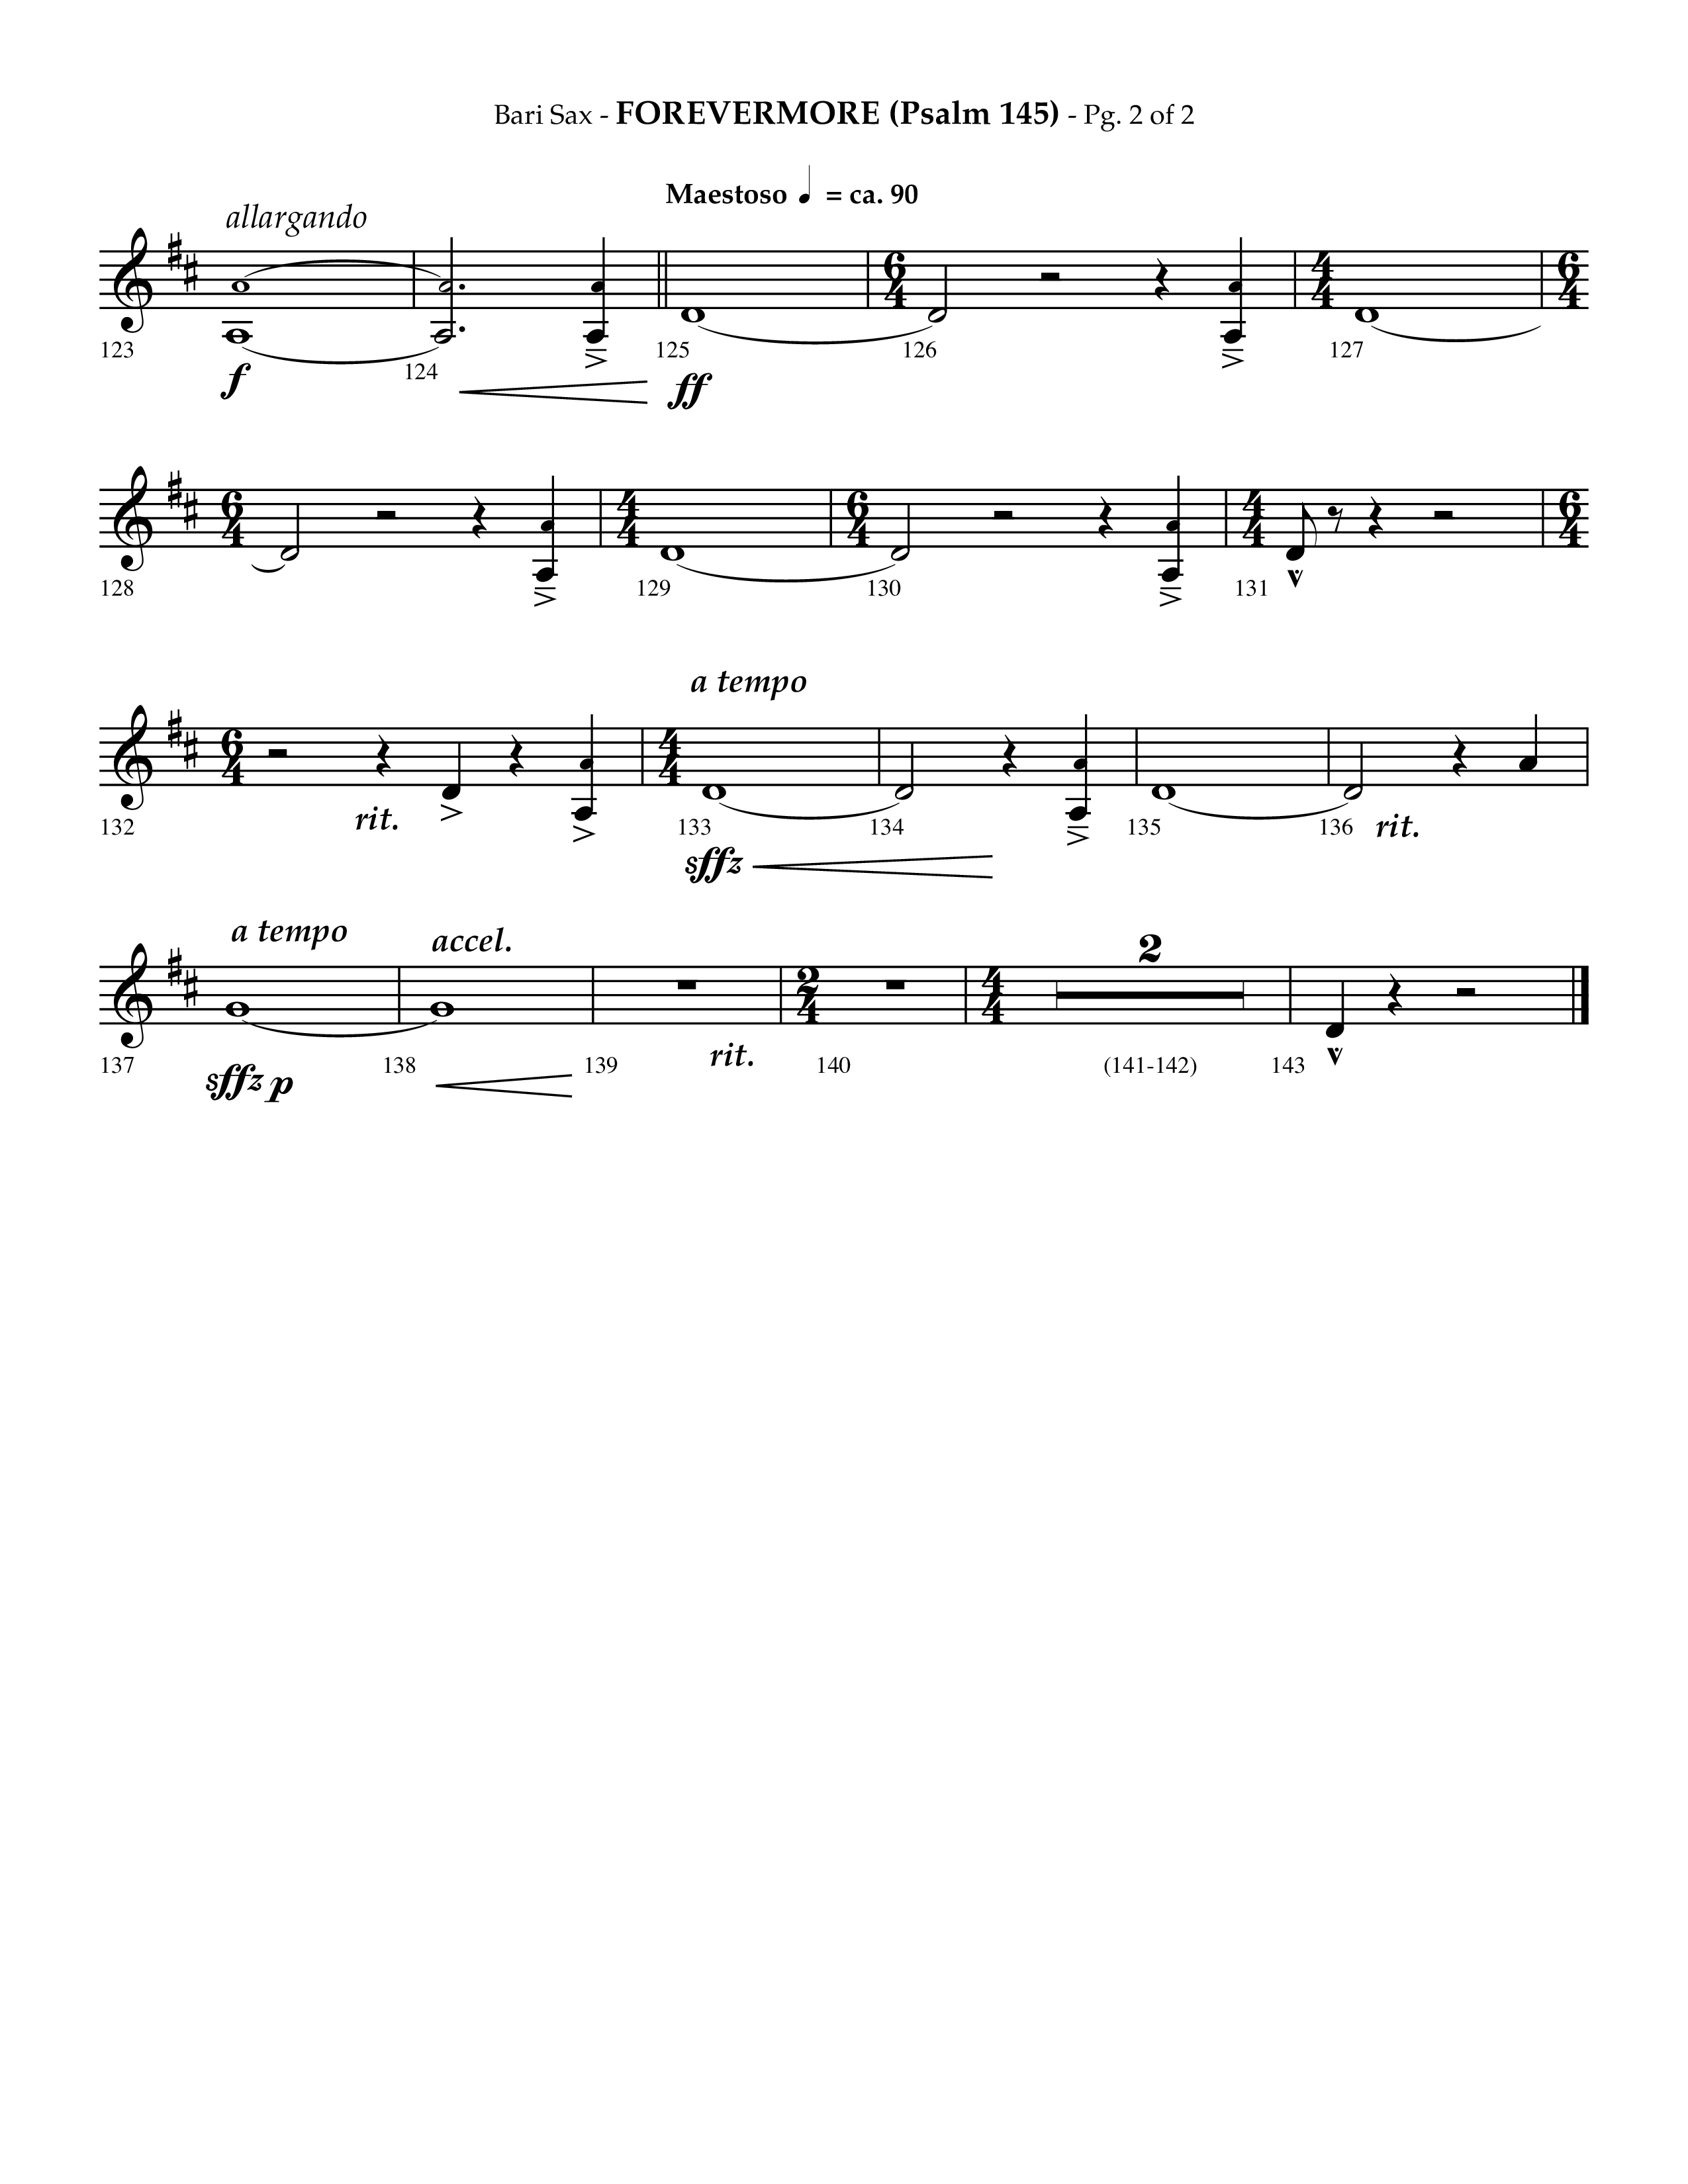 Forevermore (Psalm 145) (Choral Anthem SATB) Bari Sax (Lifeway Choral / Arr. Phillip Keveren)